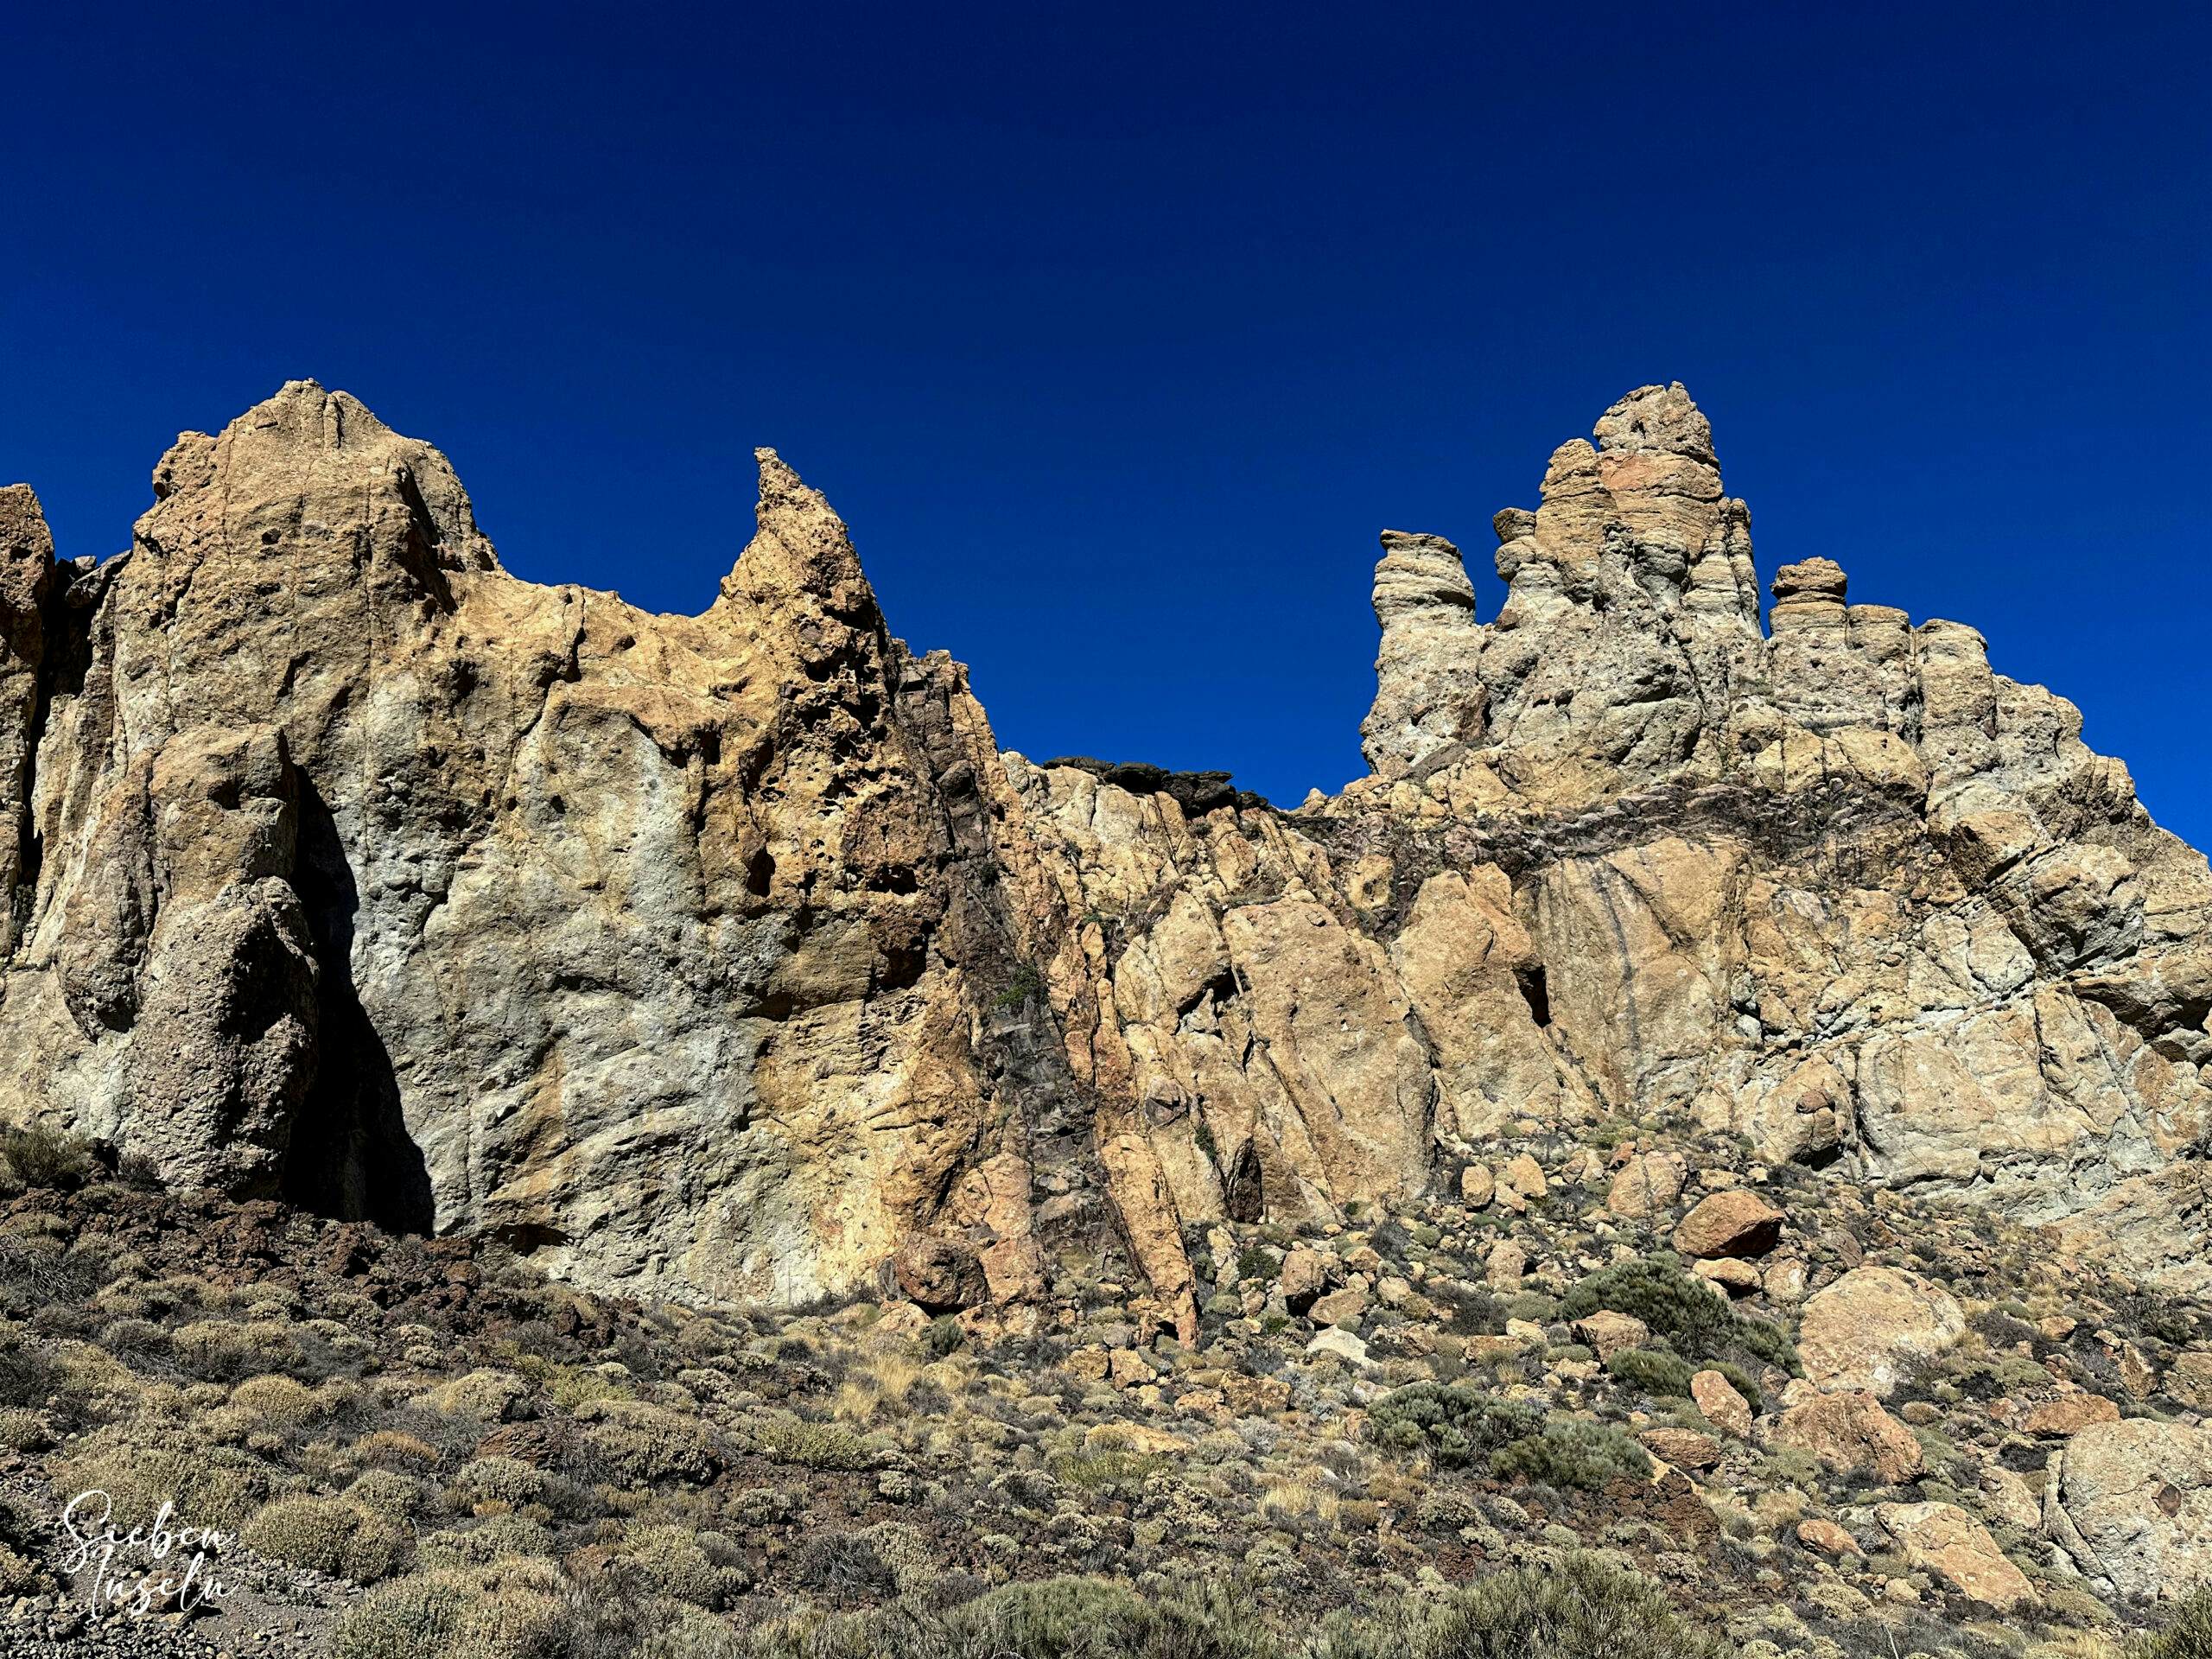 Rocks below the Roques de García seen from the hiking trail